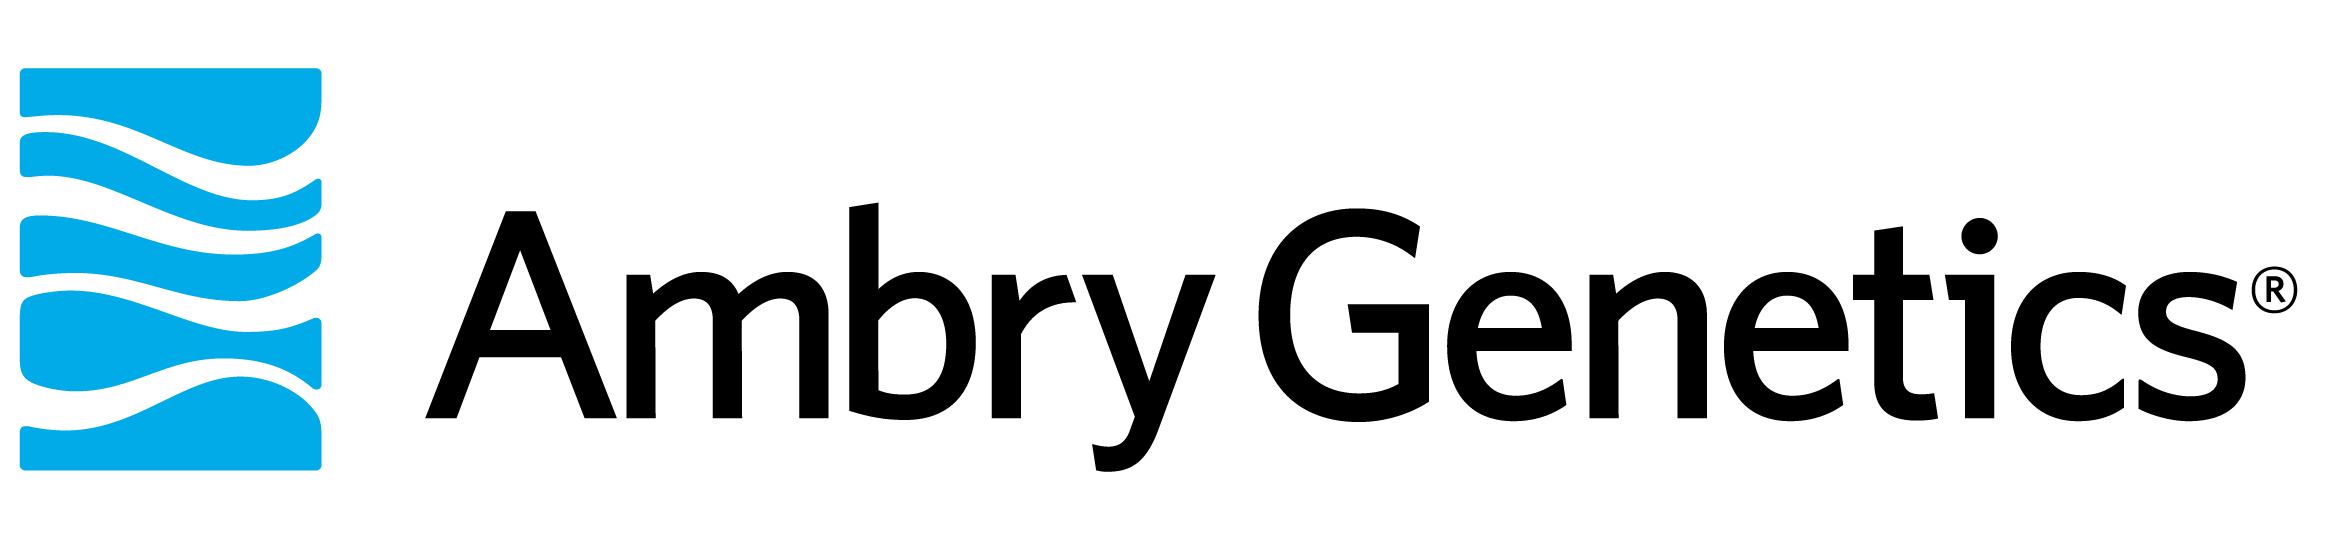 Ambry Genetics logo